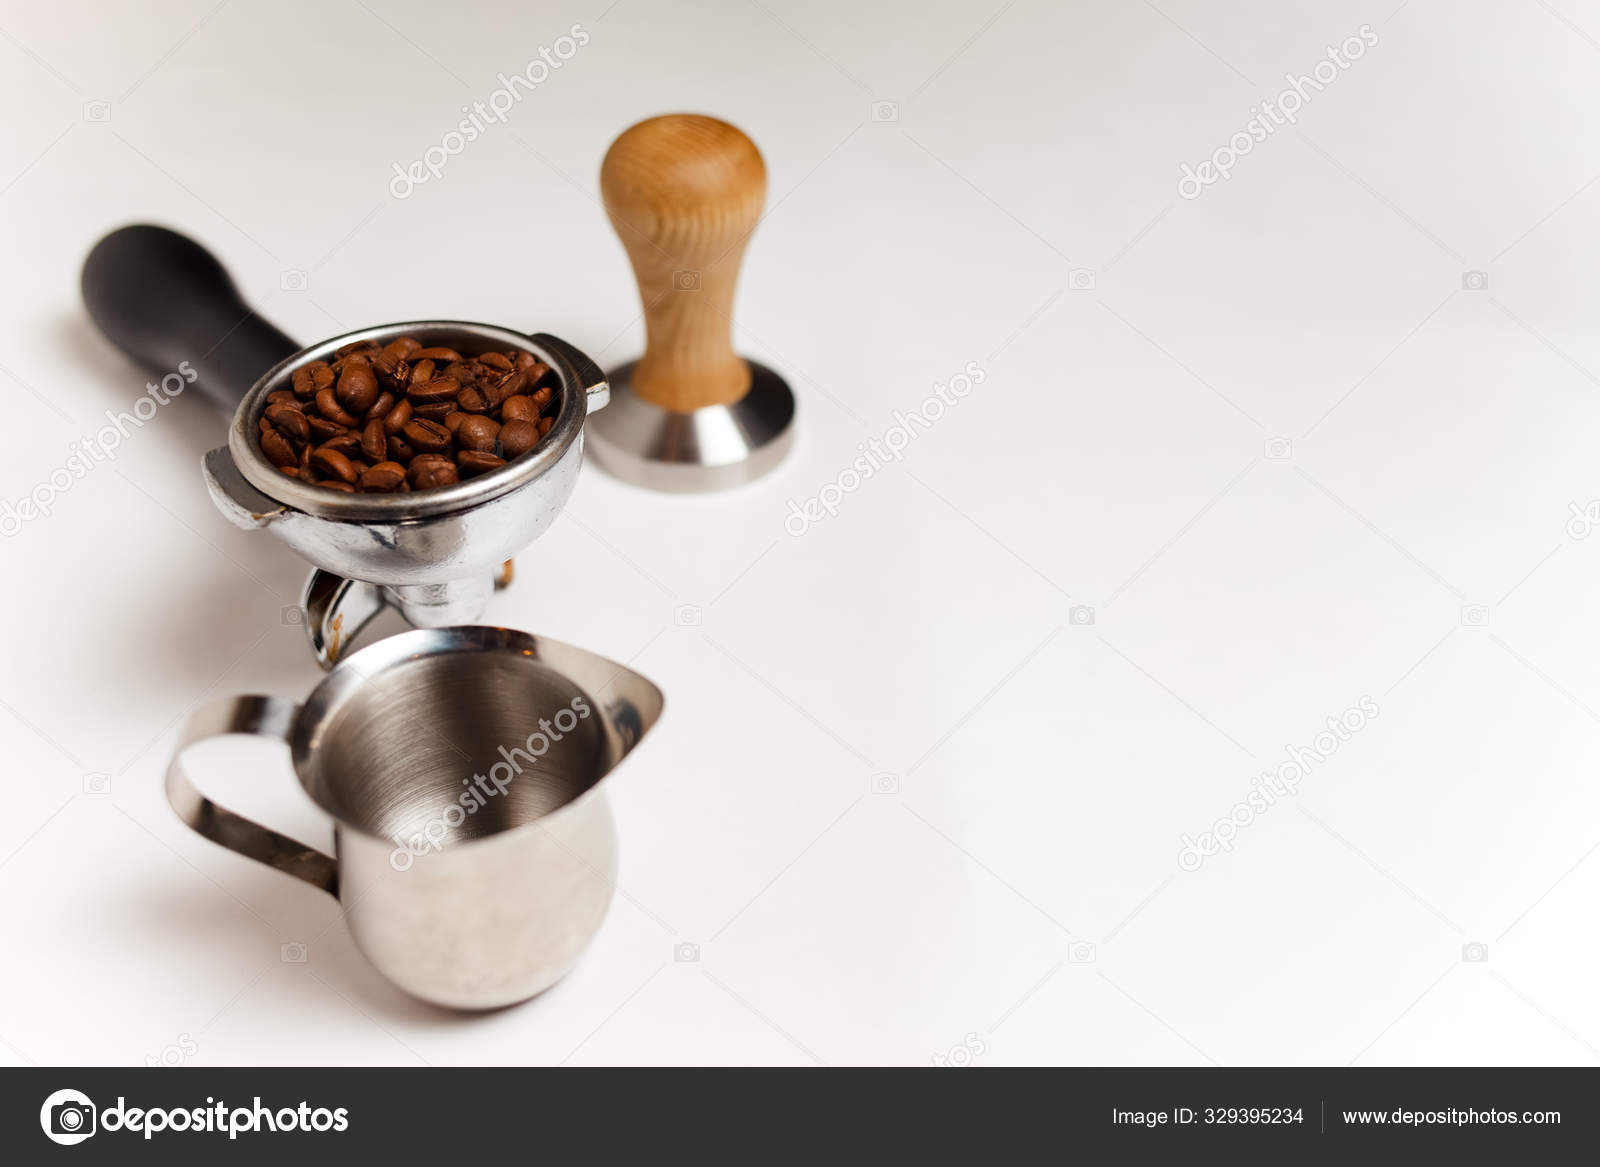 https://st3.depositphotos.com/21610024/32939/i/1600/depositphotos_329395234-stock-photo-professional-coffee-making-accessories-concept.jpg